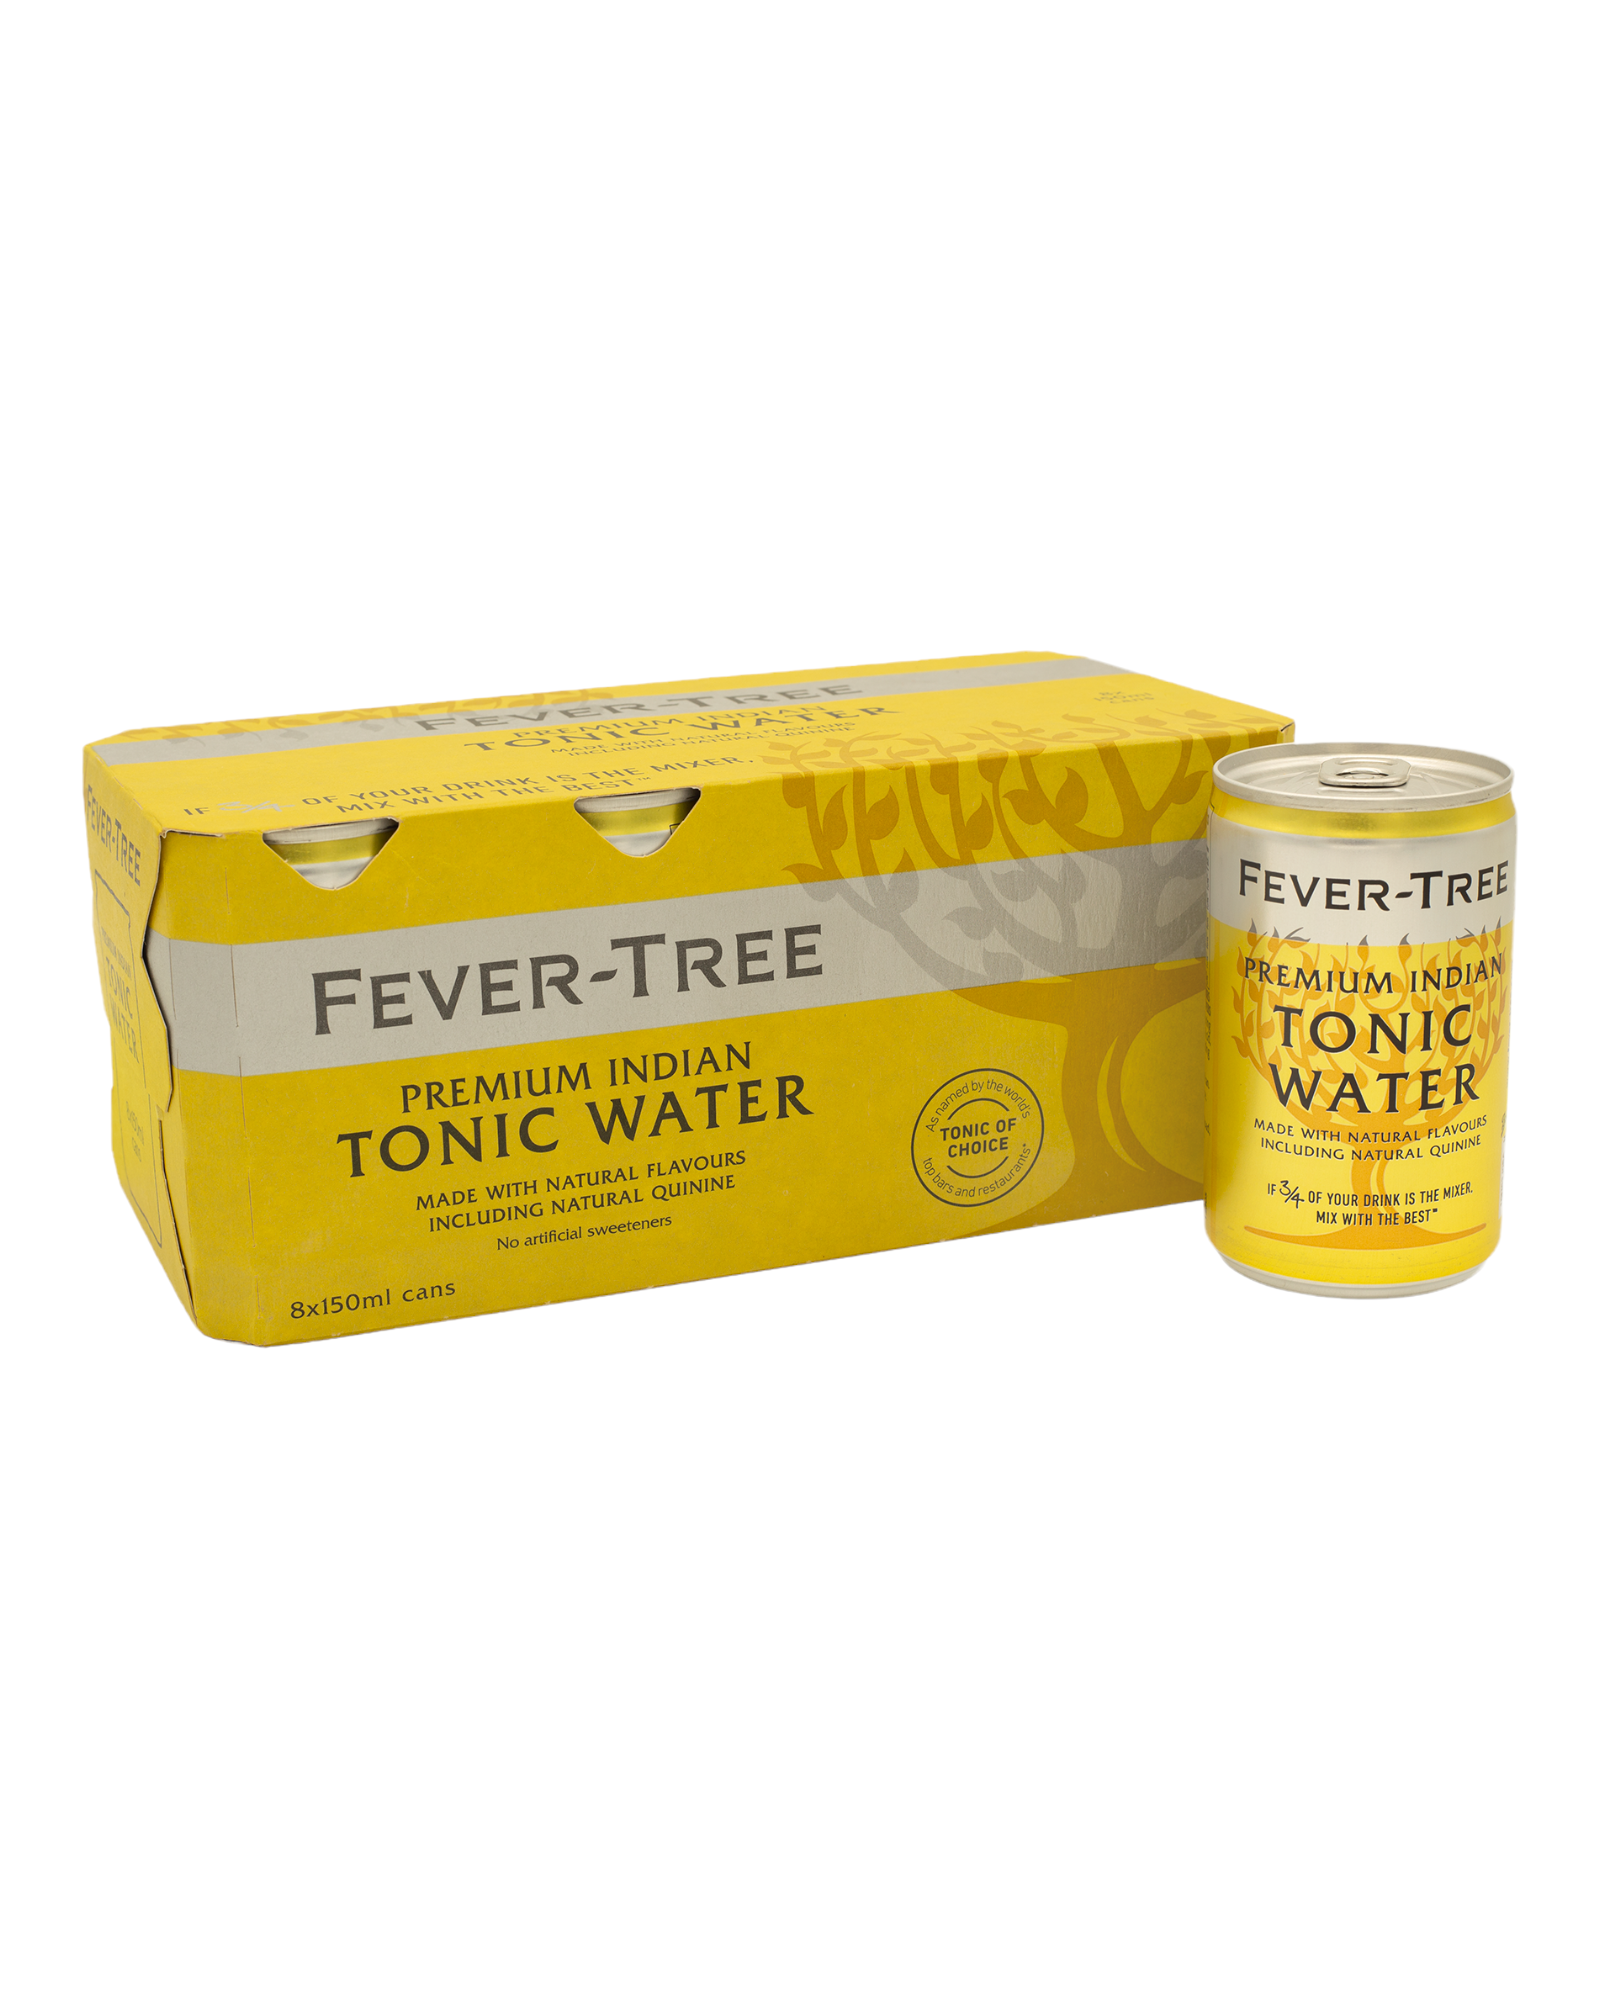 Fever-Tree Premium Indian Tonic Water mini can (150ml x 8)